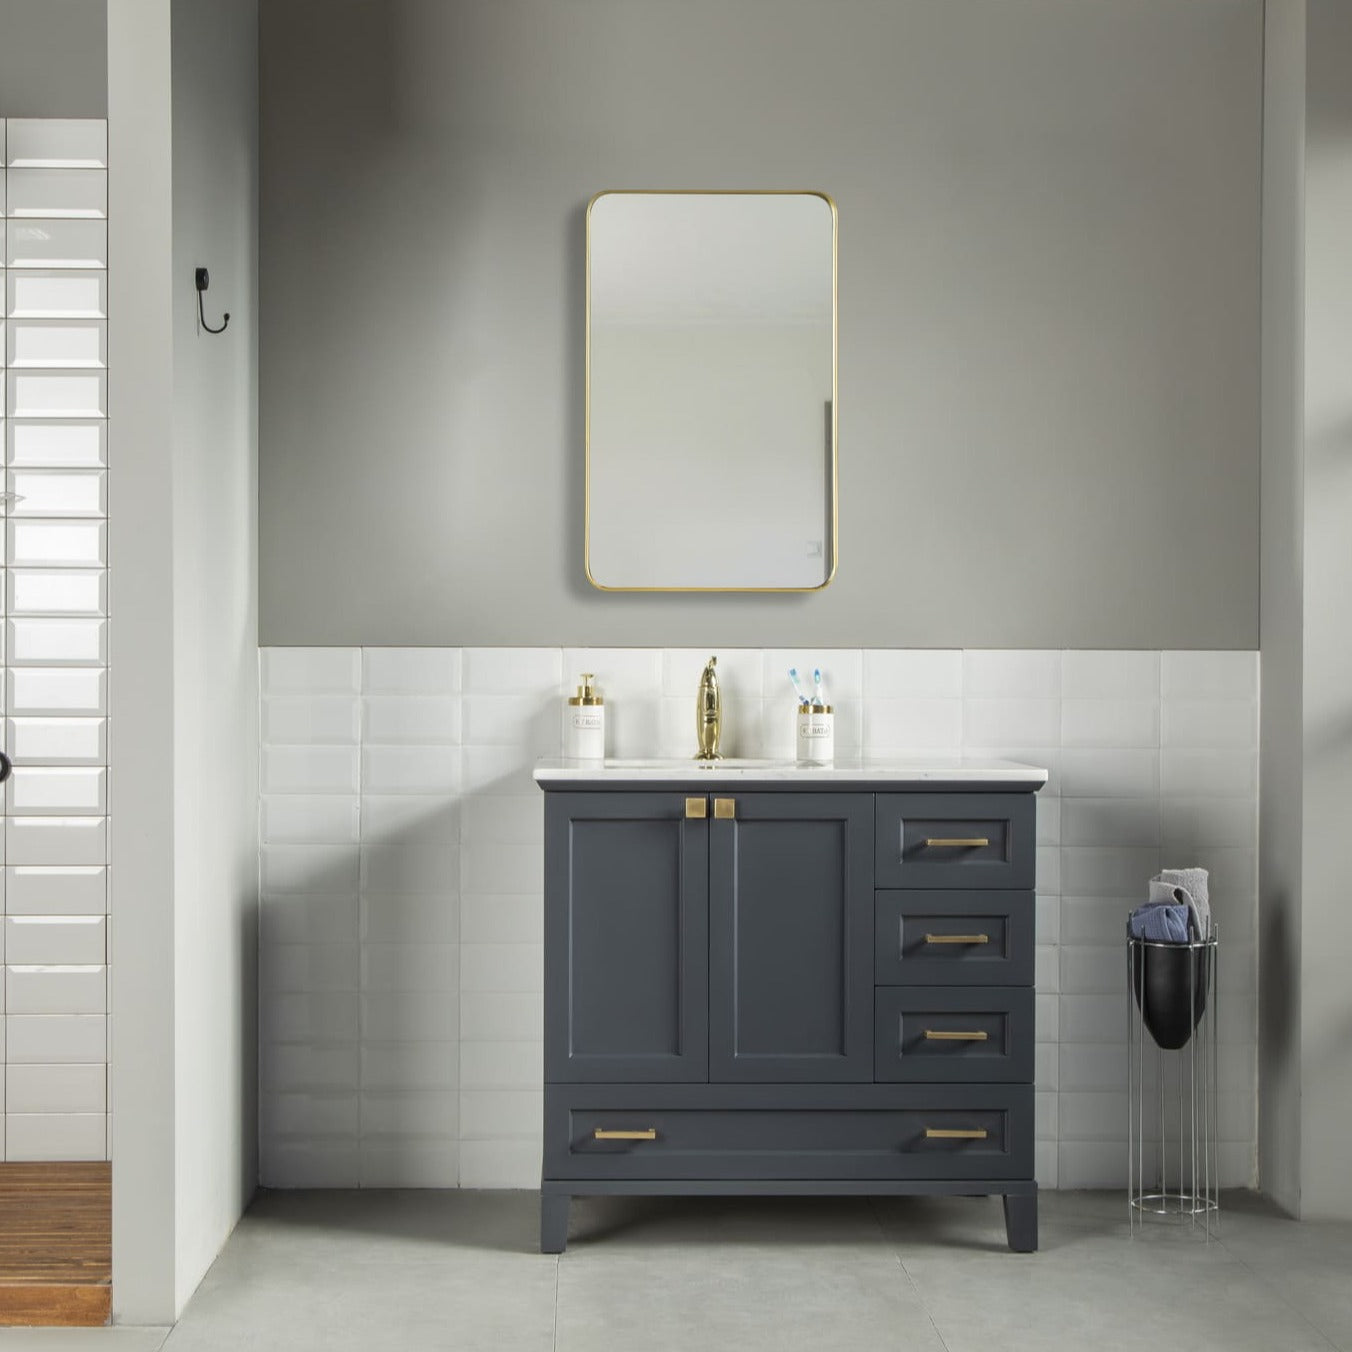 Paloma Bathroom Cabinets  Homelero 36"  #size_36"  #color_dark grey  #hardware_brass